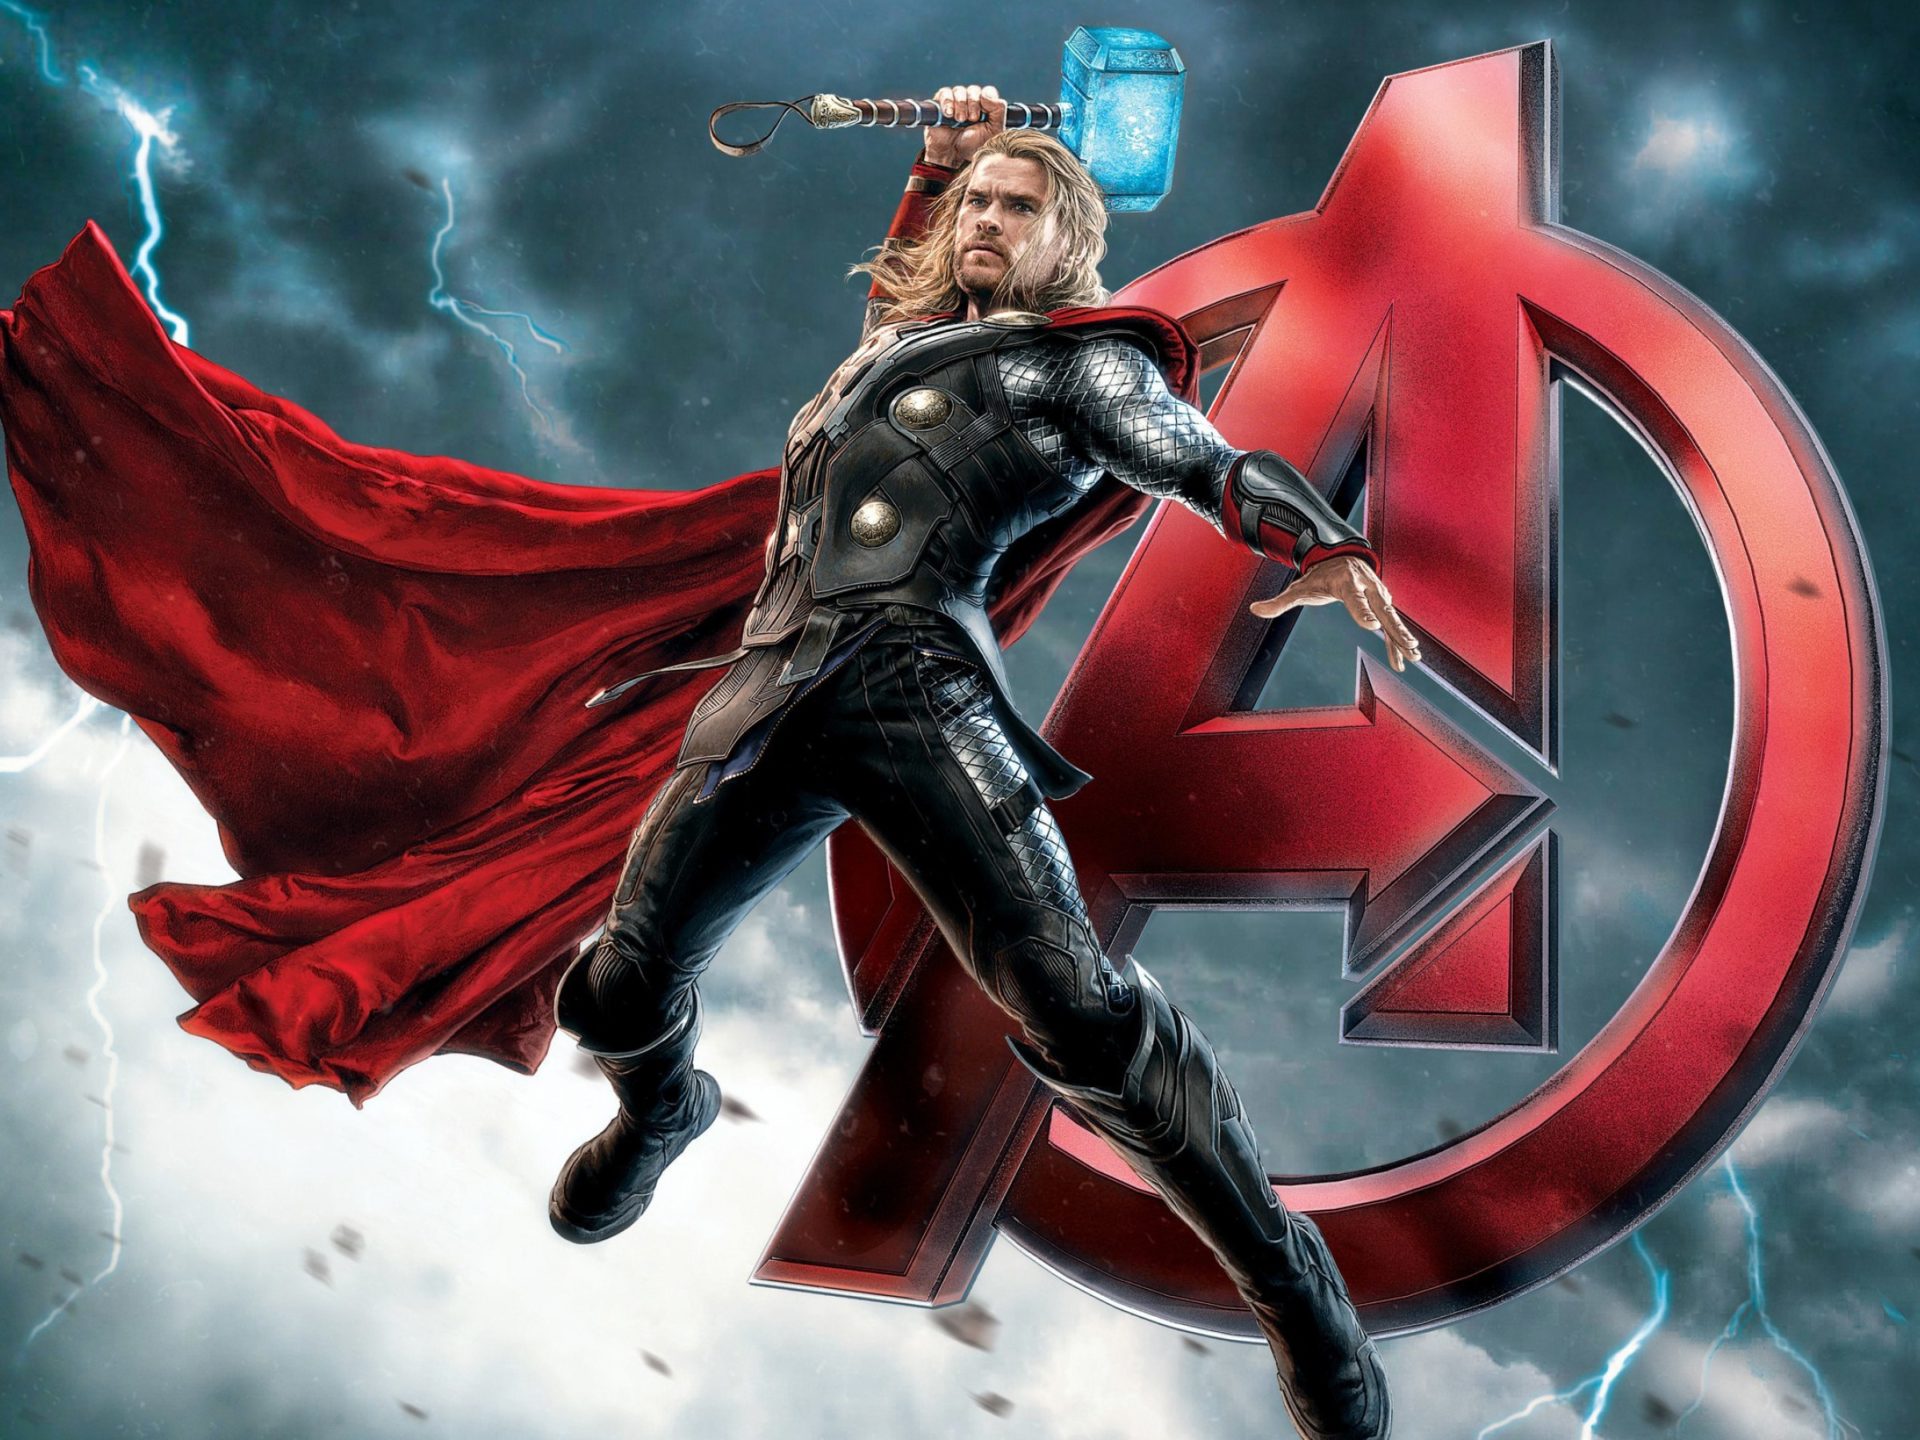 The Avengers Fantasy Warrior Thor Super Hero Poster Ultra HD 4k Wallpaper 2880x1800, Wallpaper13.com